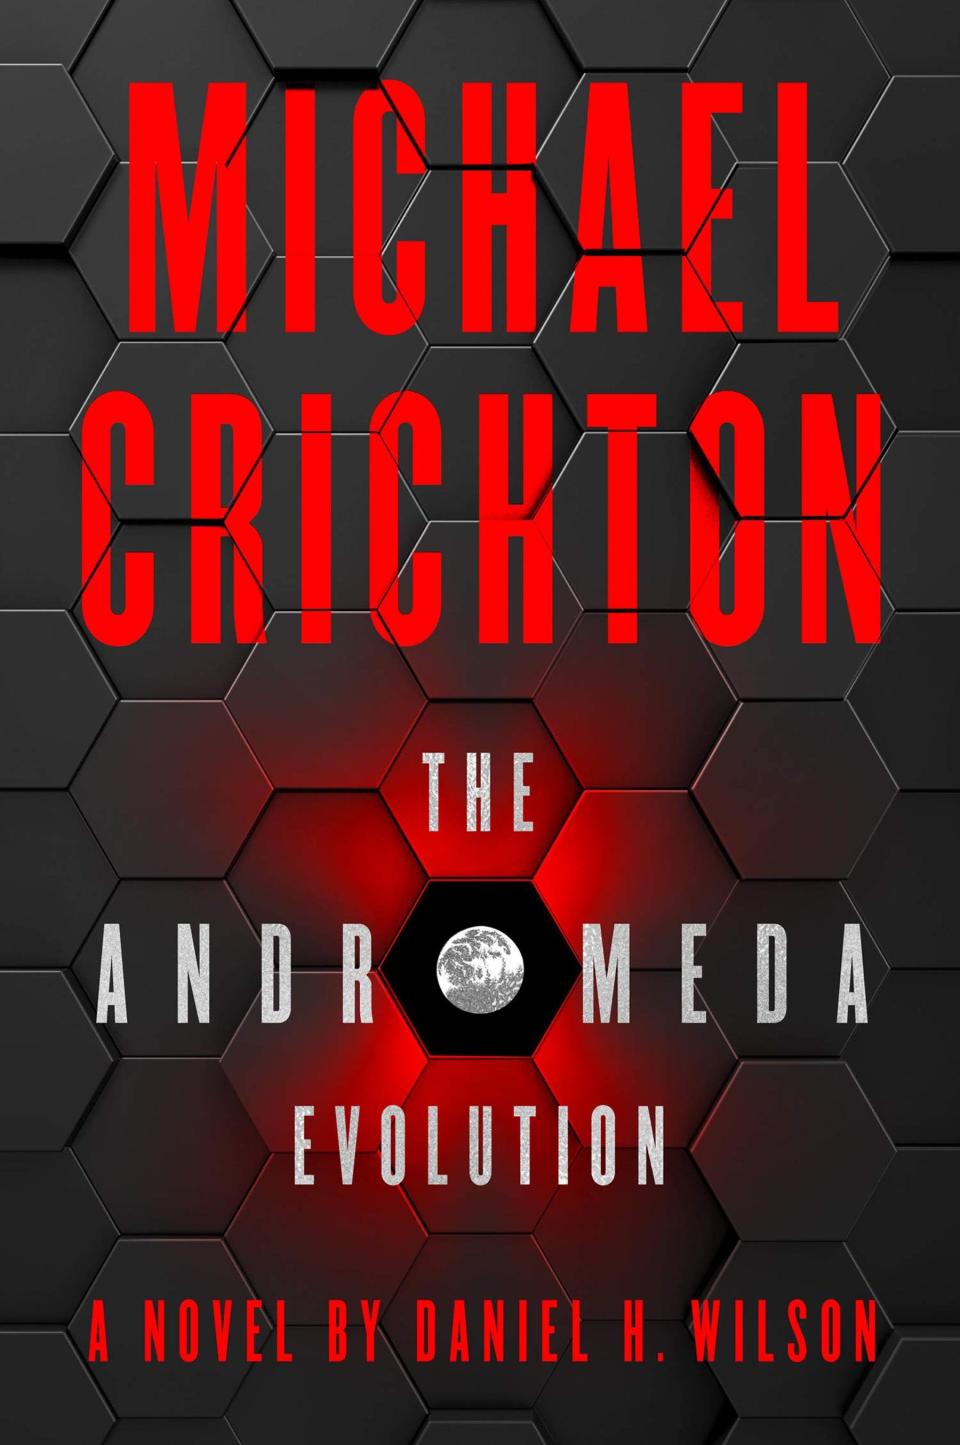 The Andromeda Evolution , by Daniel H. Wilson 